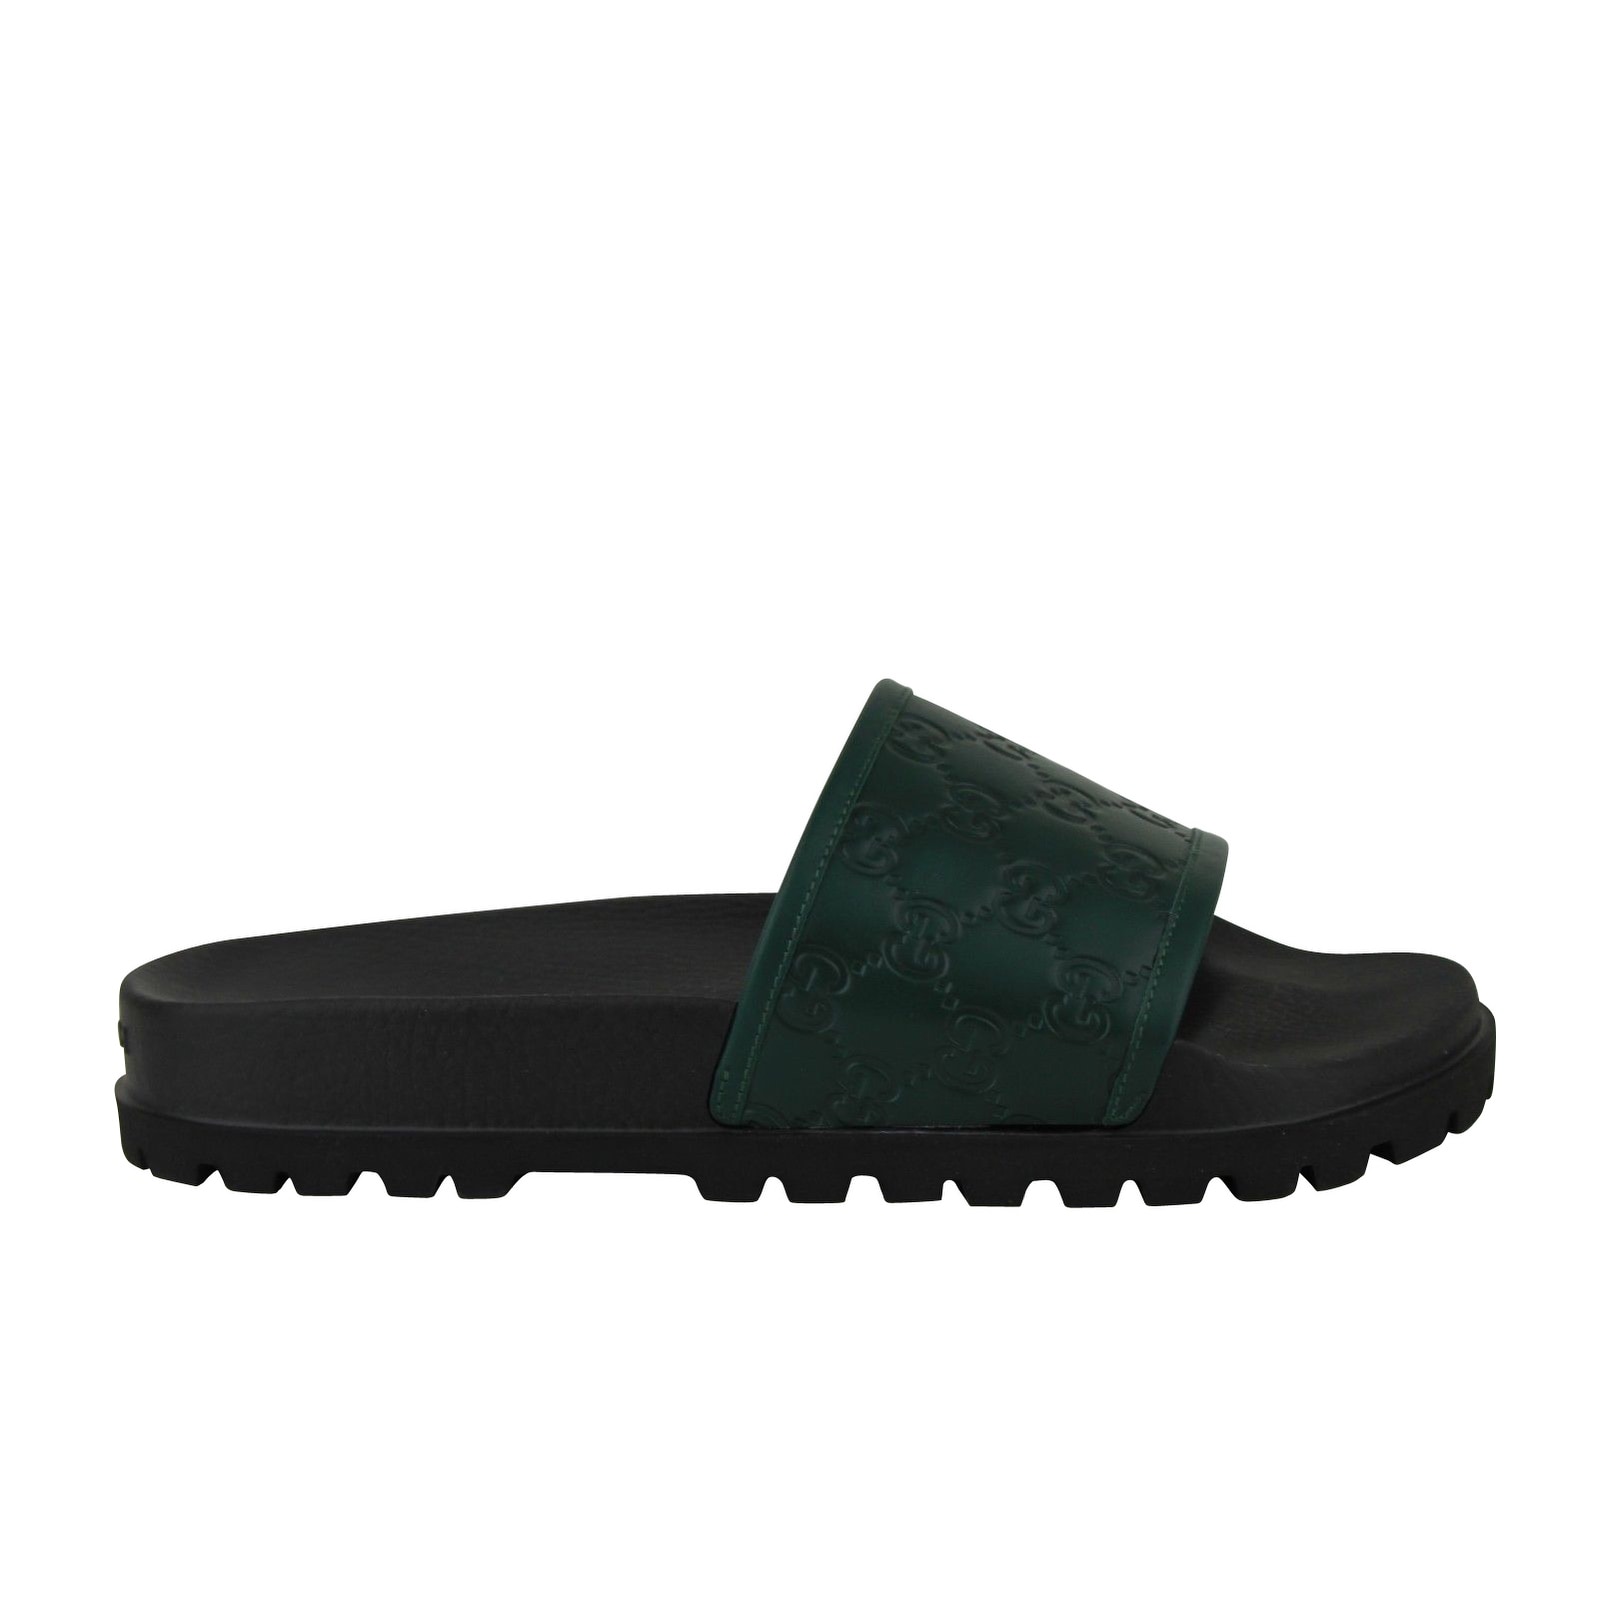 Black Leather Sandals 431070 3020 